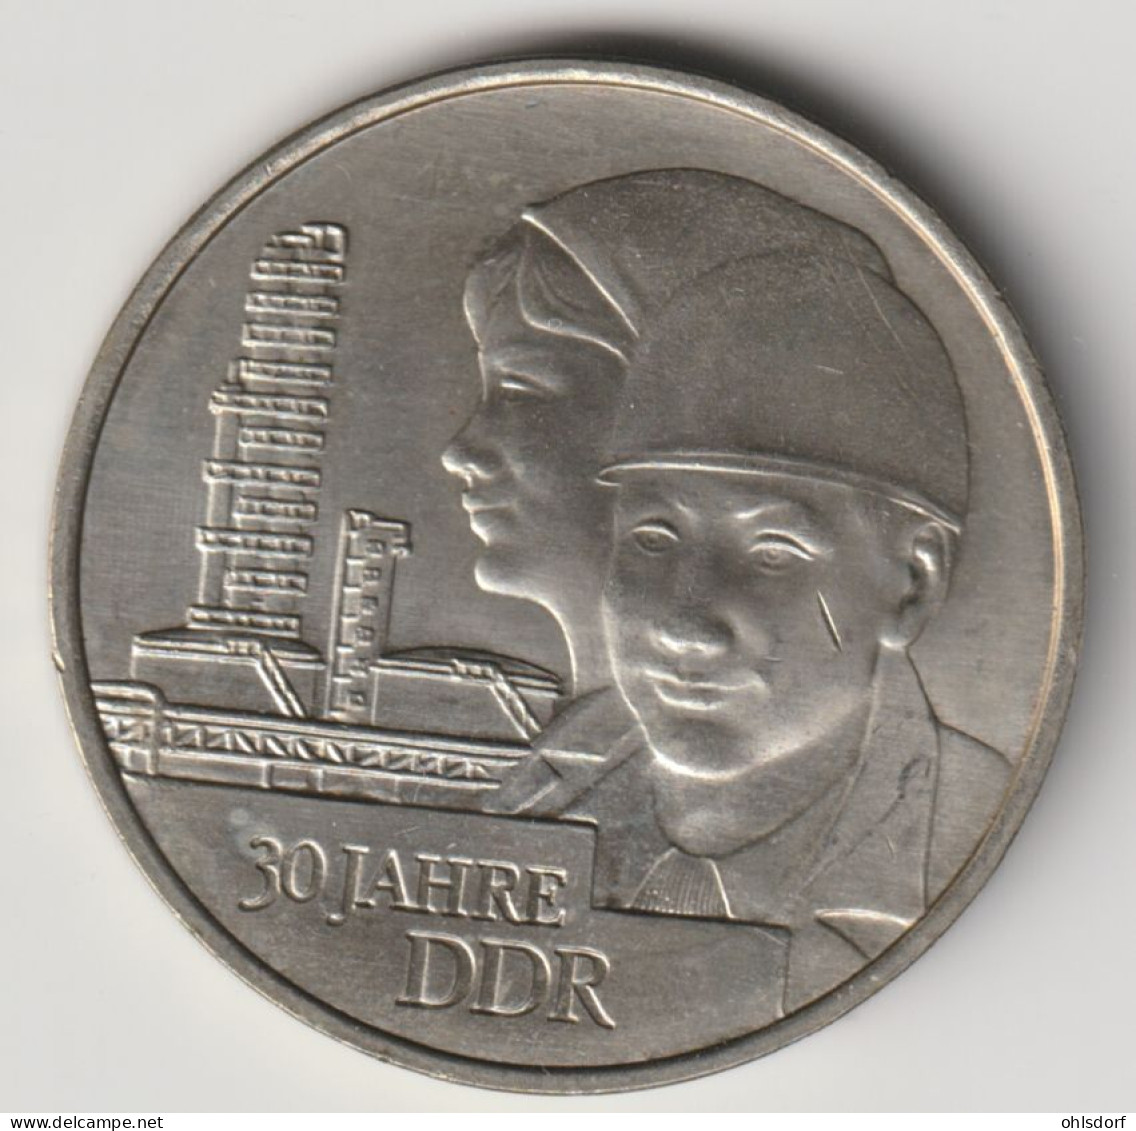 DDR 1979: 20 Mark, 30 Jahre, KM 75 - 20 Mark